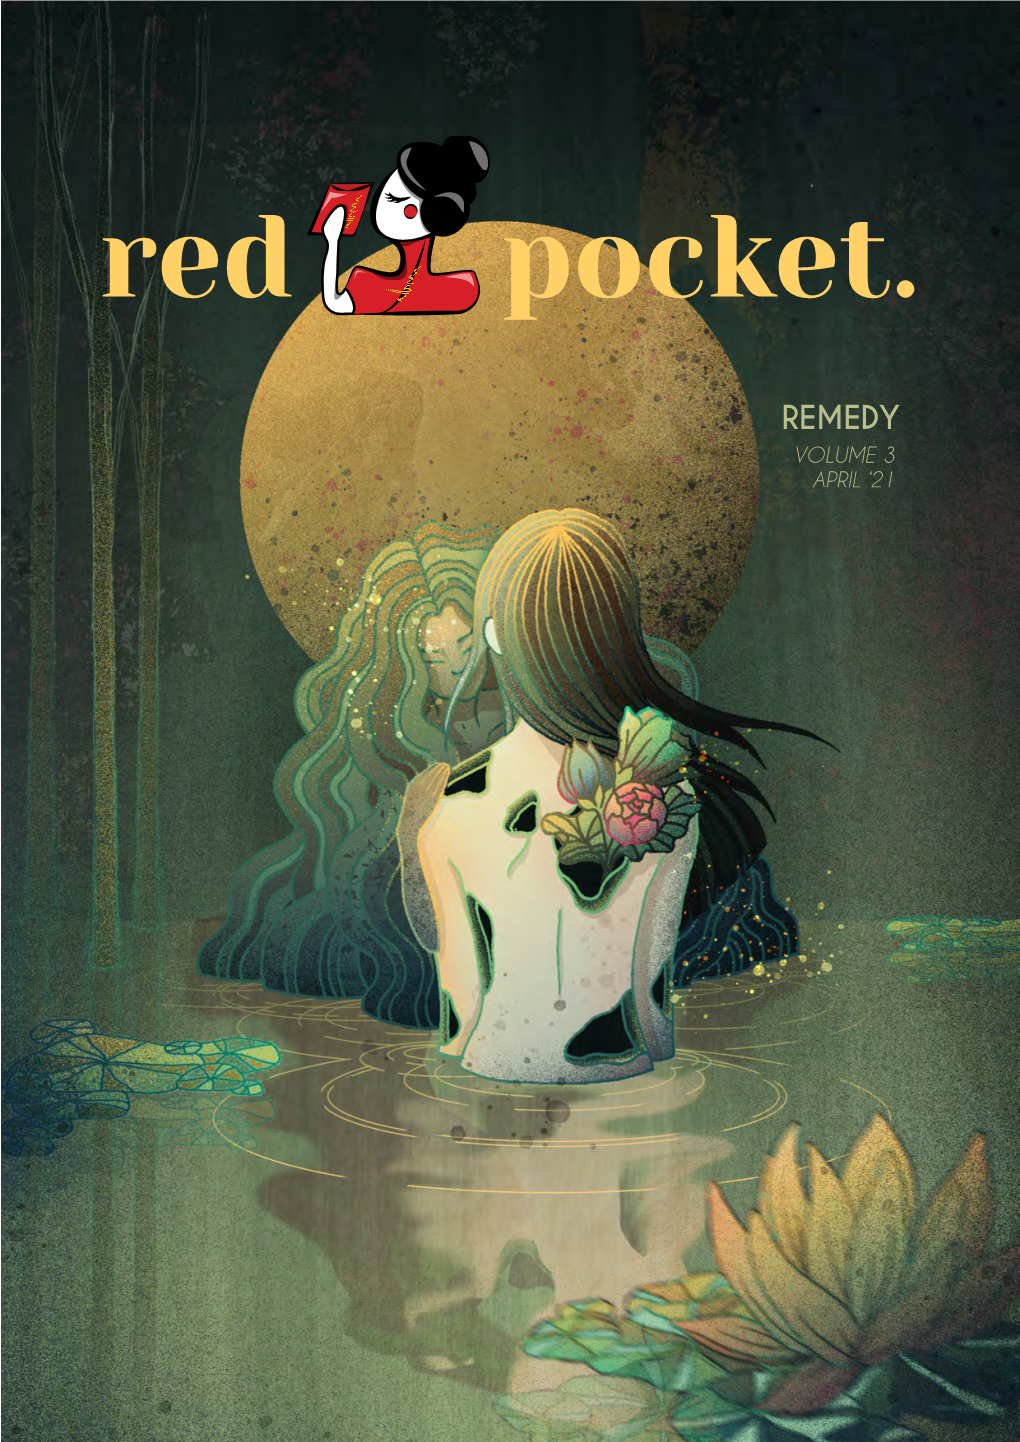 Remedy Volume 3 April ‘21